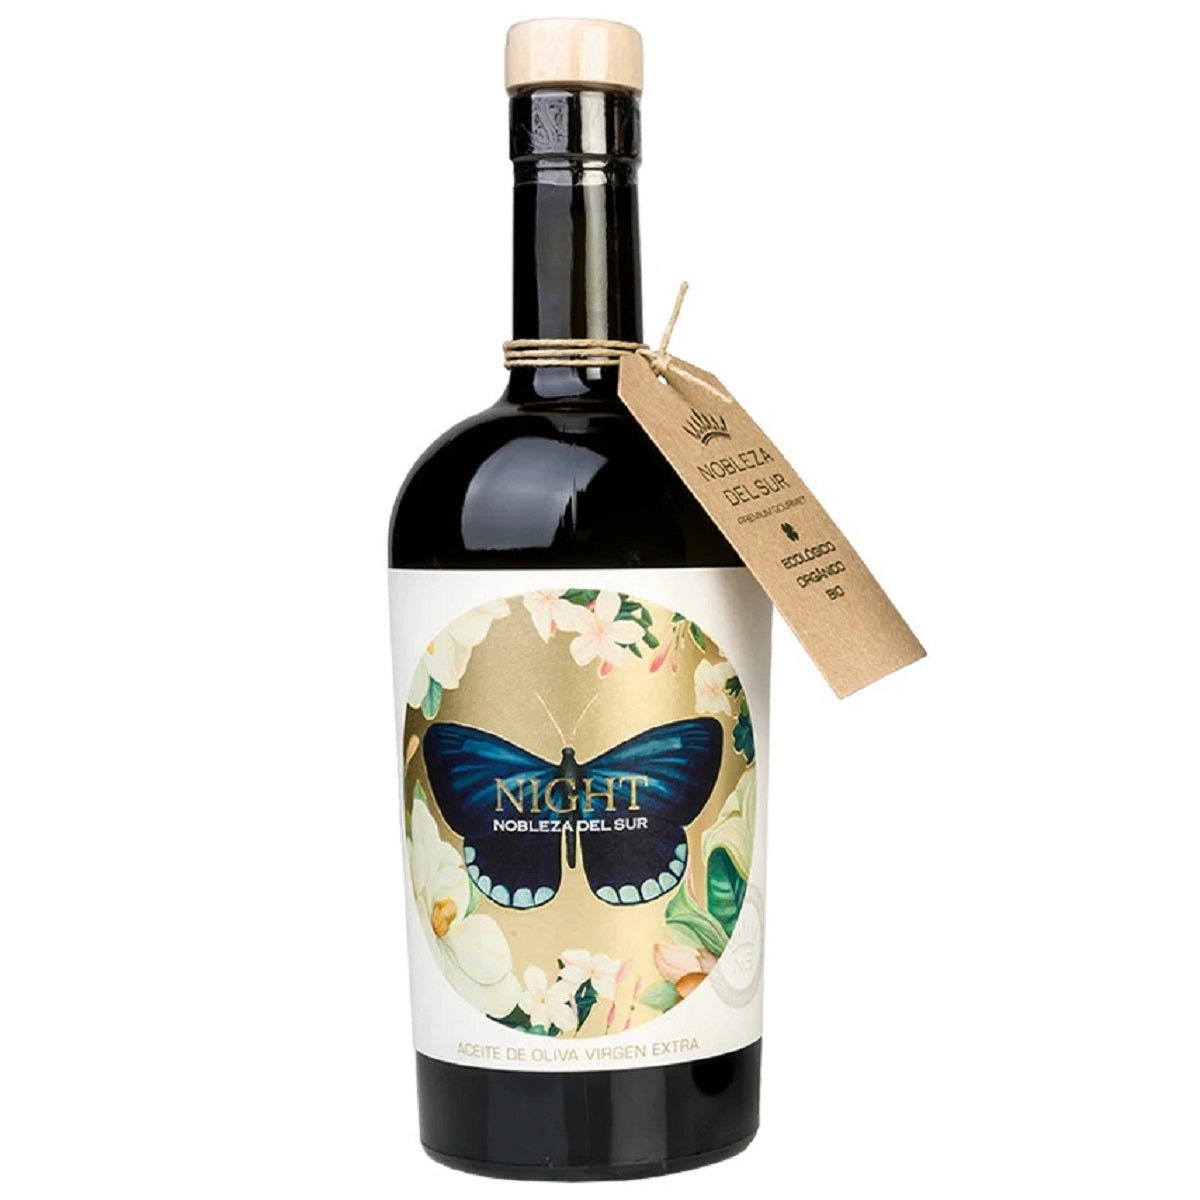 Nobleza del Sur Eco Night Organic Extra Virgin Olive Oil 500ml